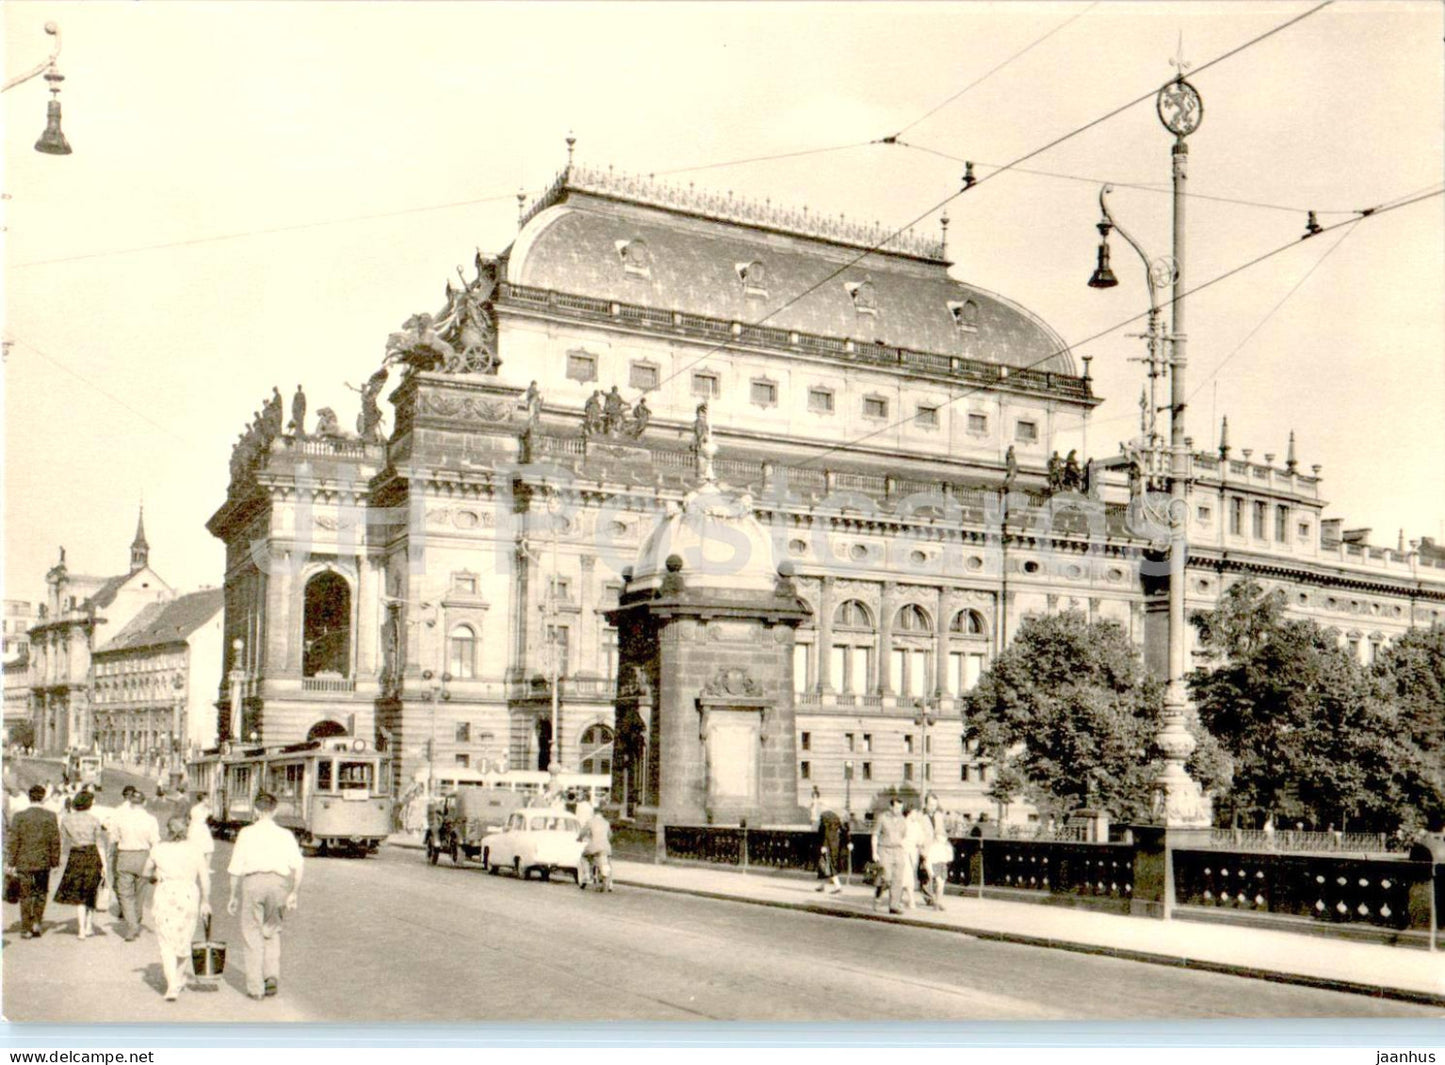 Praha - Prague - Narodni divadlo - National Theatre - tram - 10-51318 - Czech Republic - Czechoslovakia - unused - JH Postcards